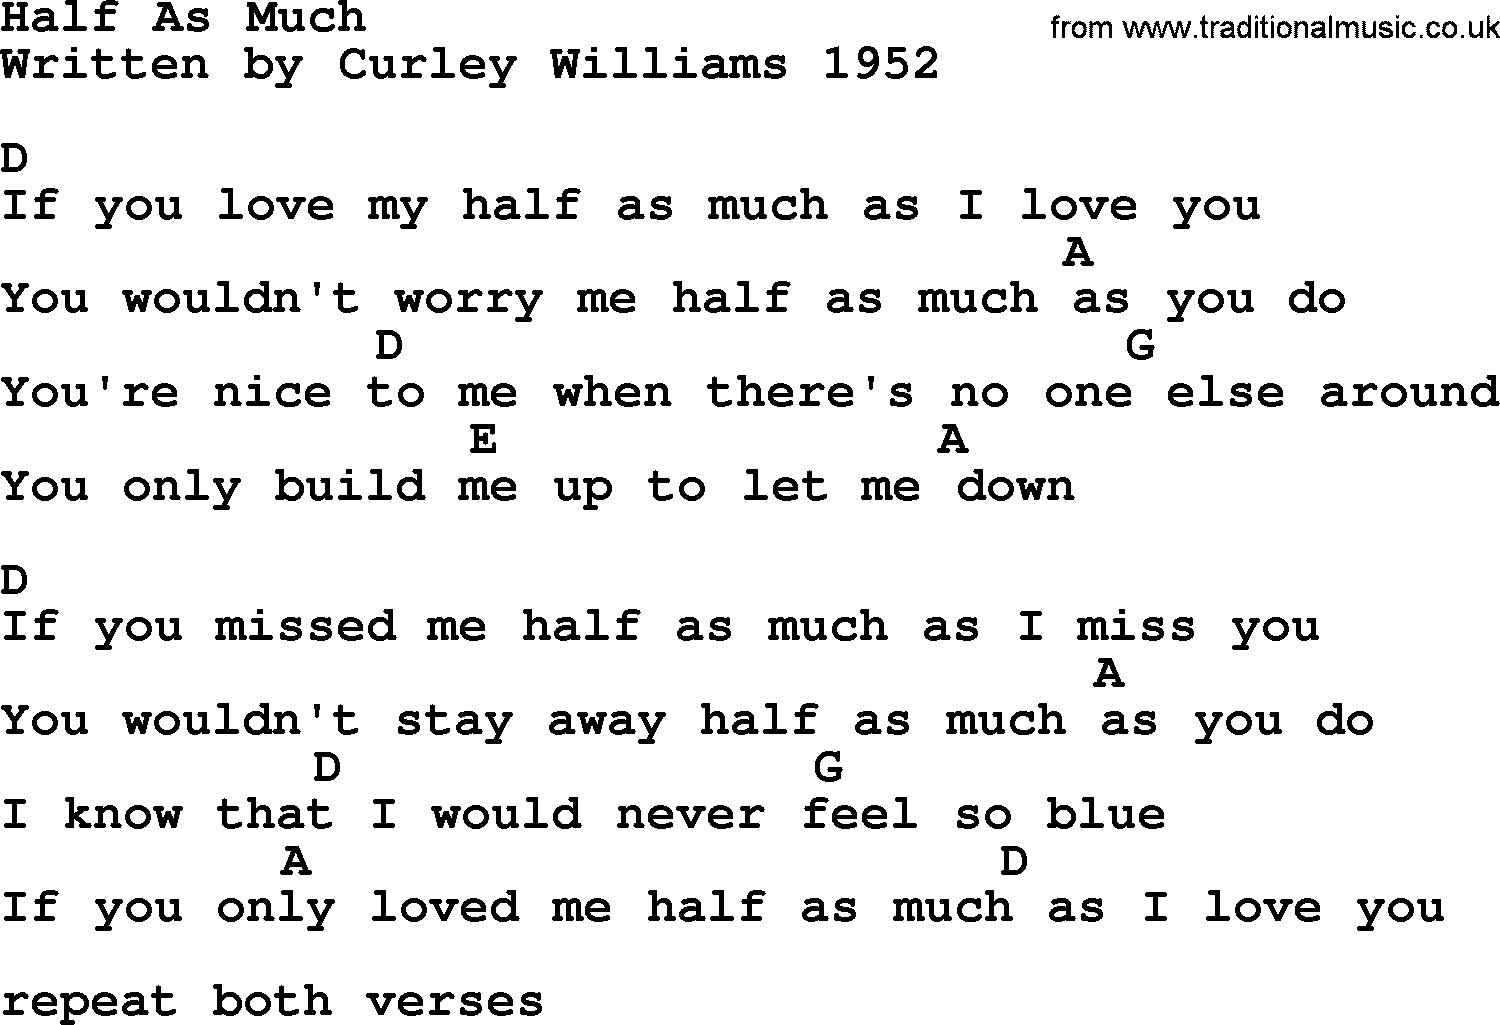 Hank Williams song Half As Much, lyrics and chords